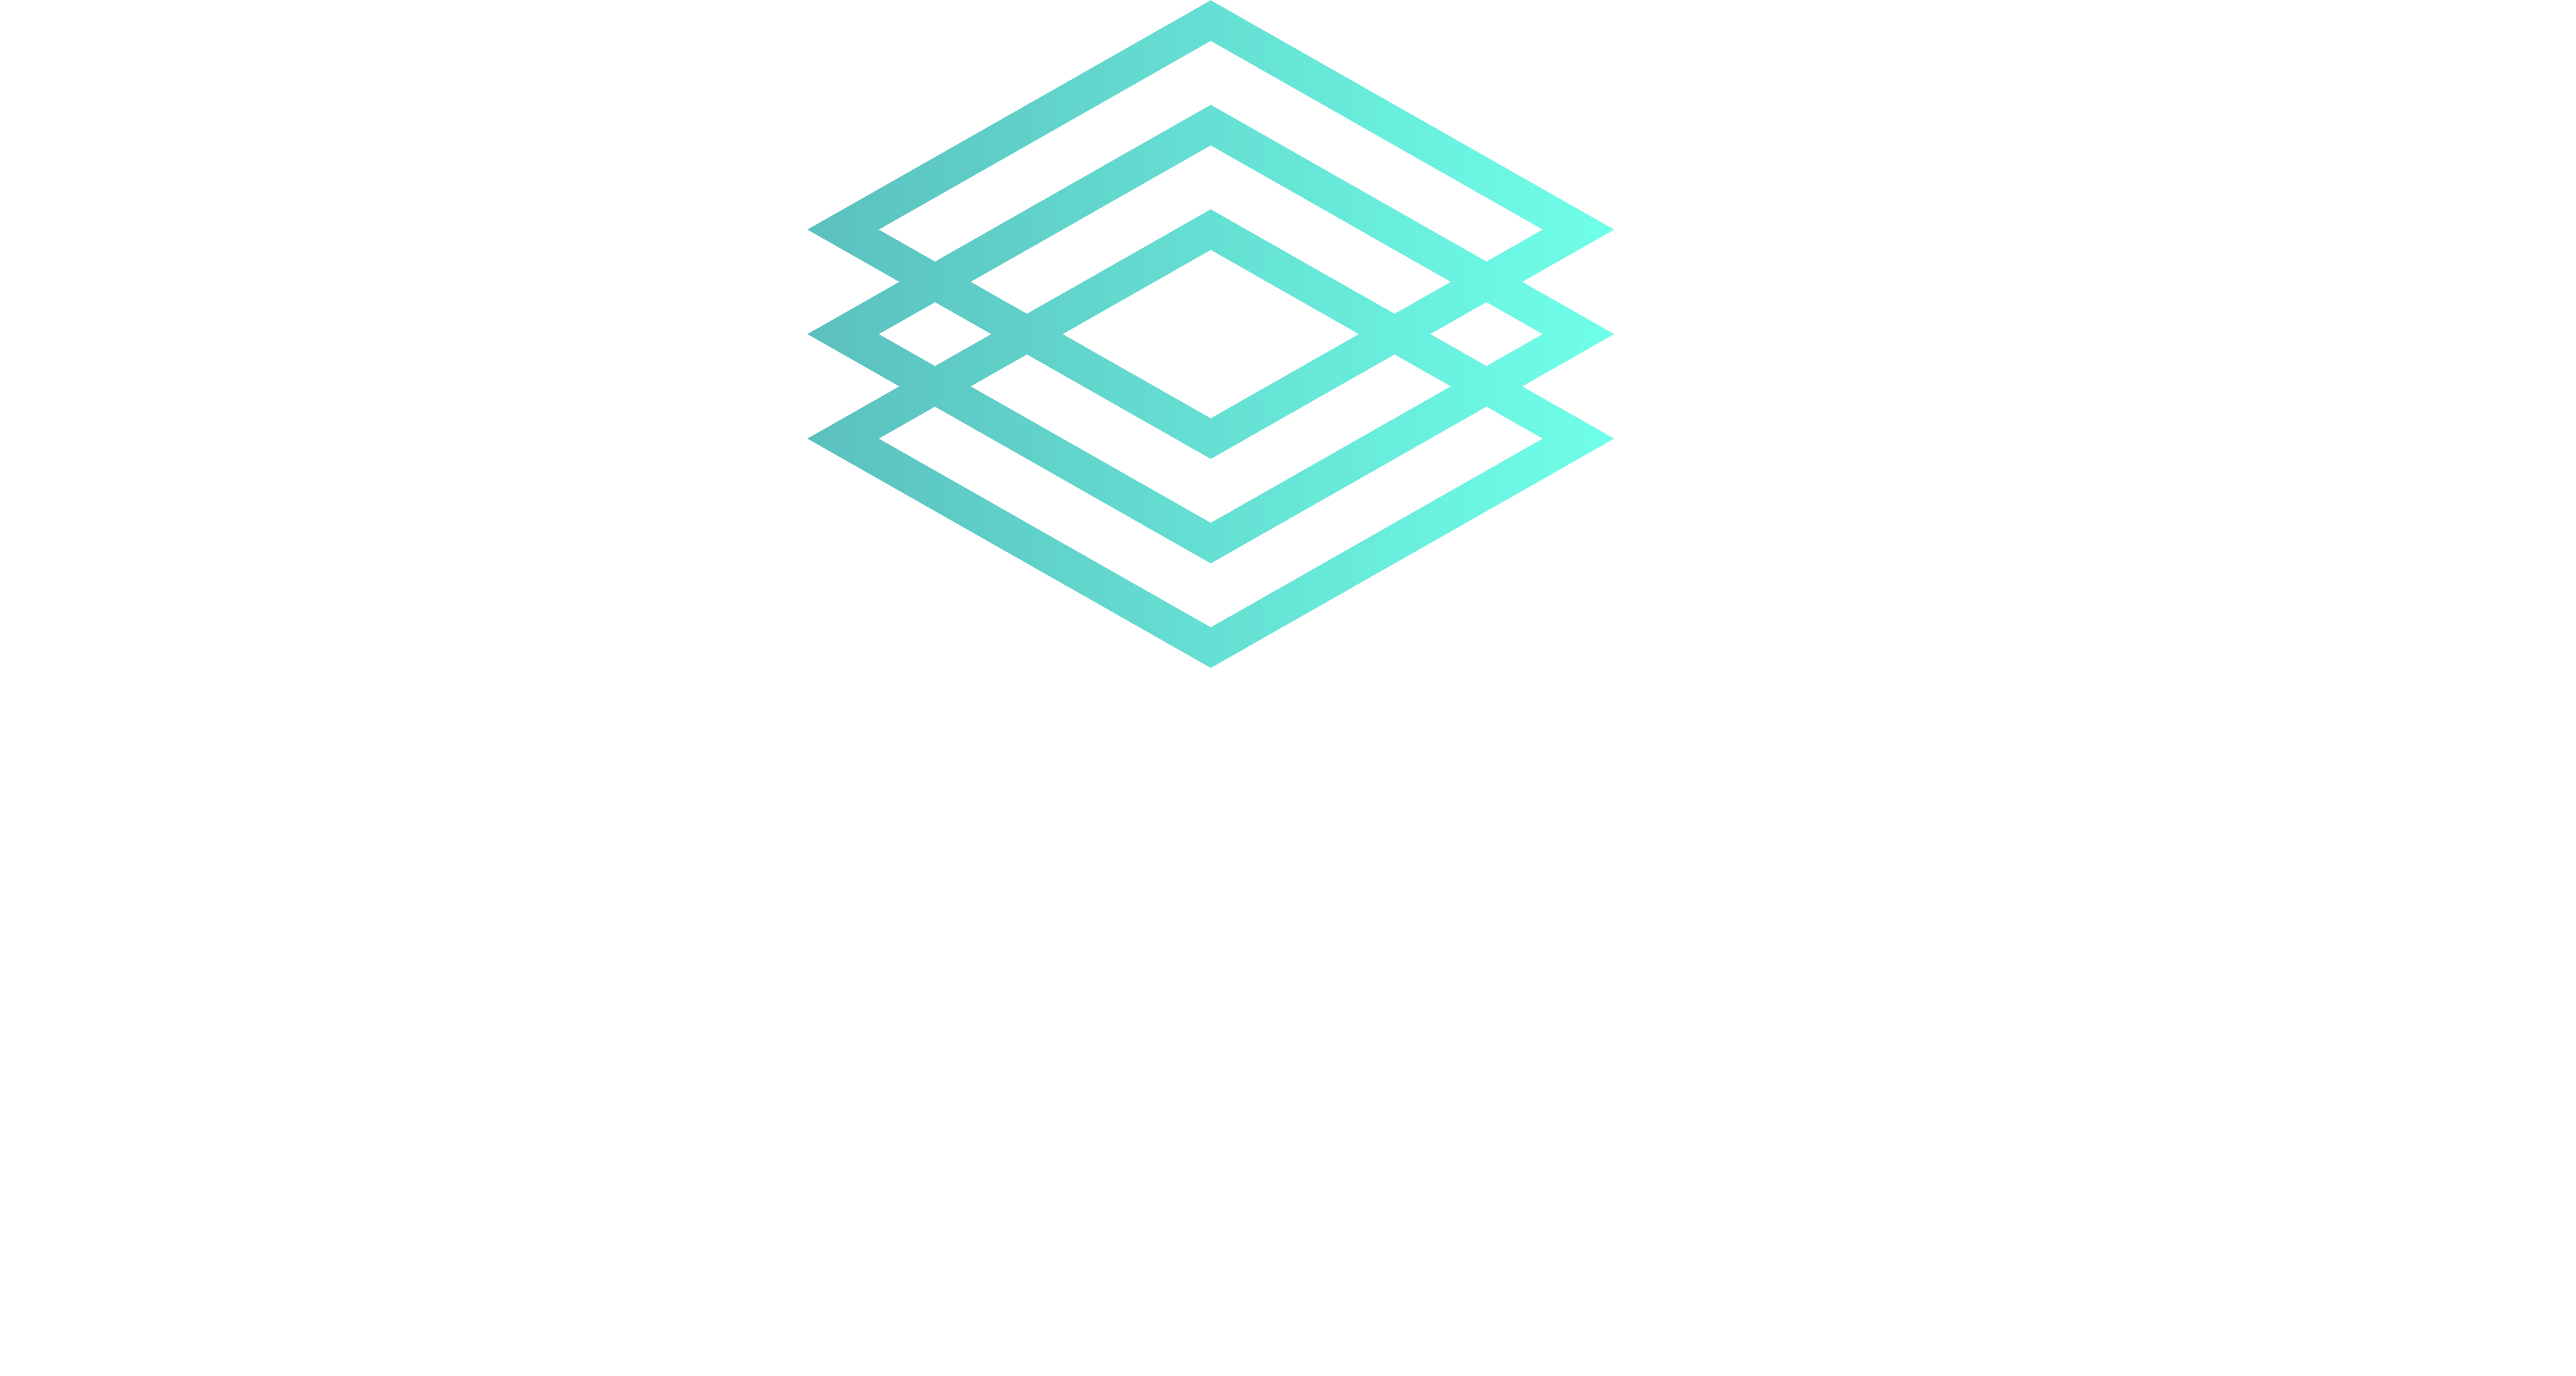 Trialta Logo